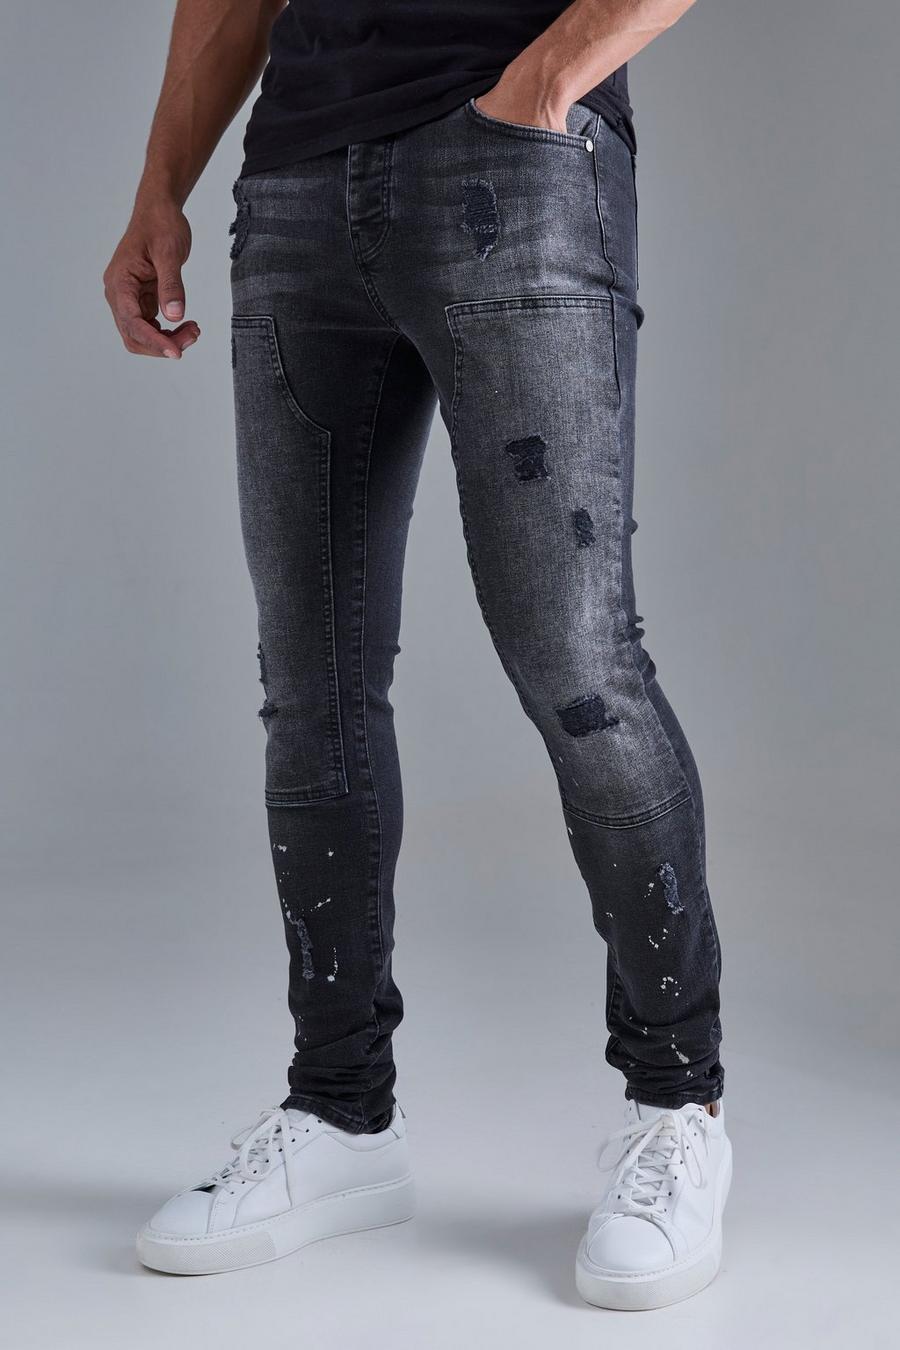 Black Zwarte Gescheurde Stretch Skinny Jeans Met Zoom Rits